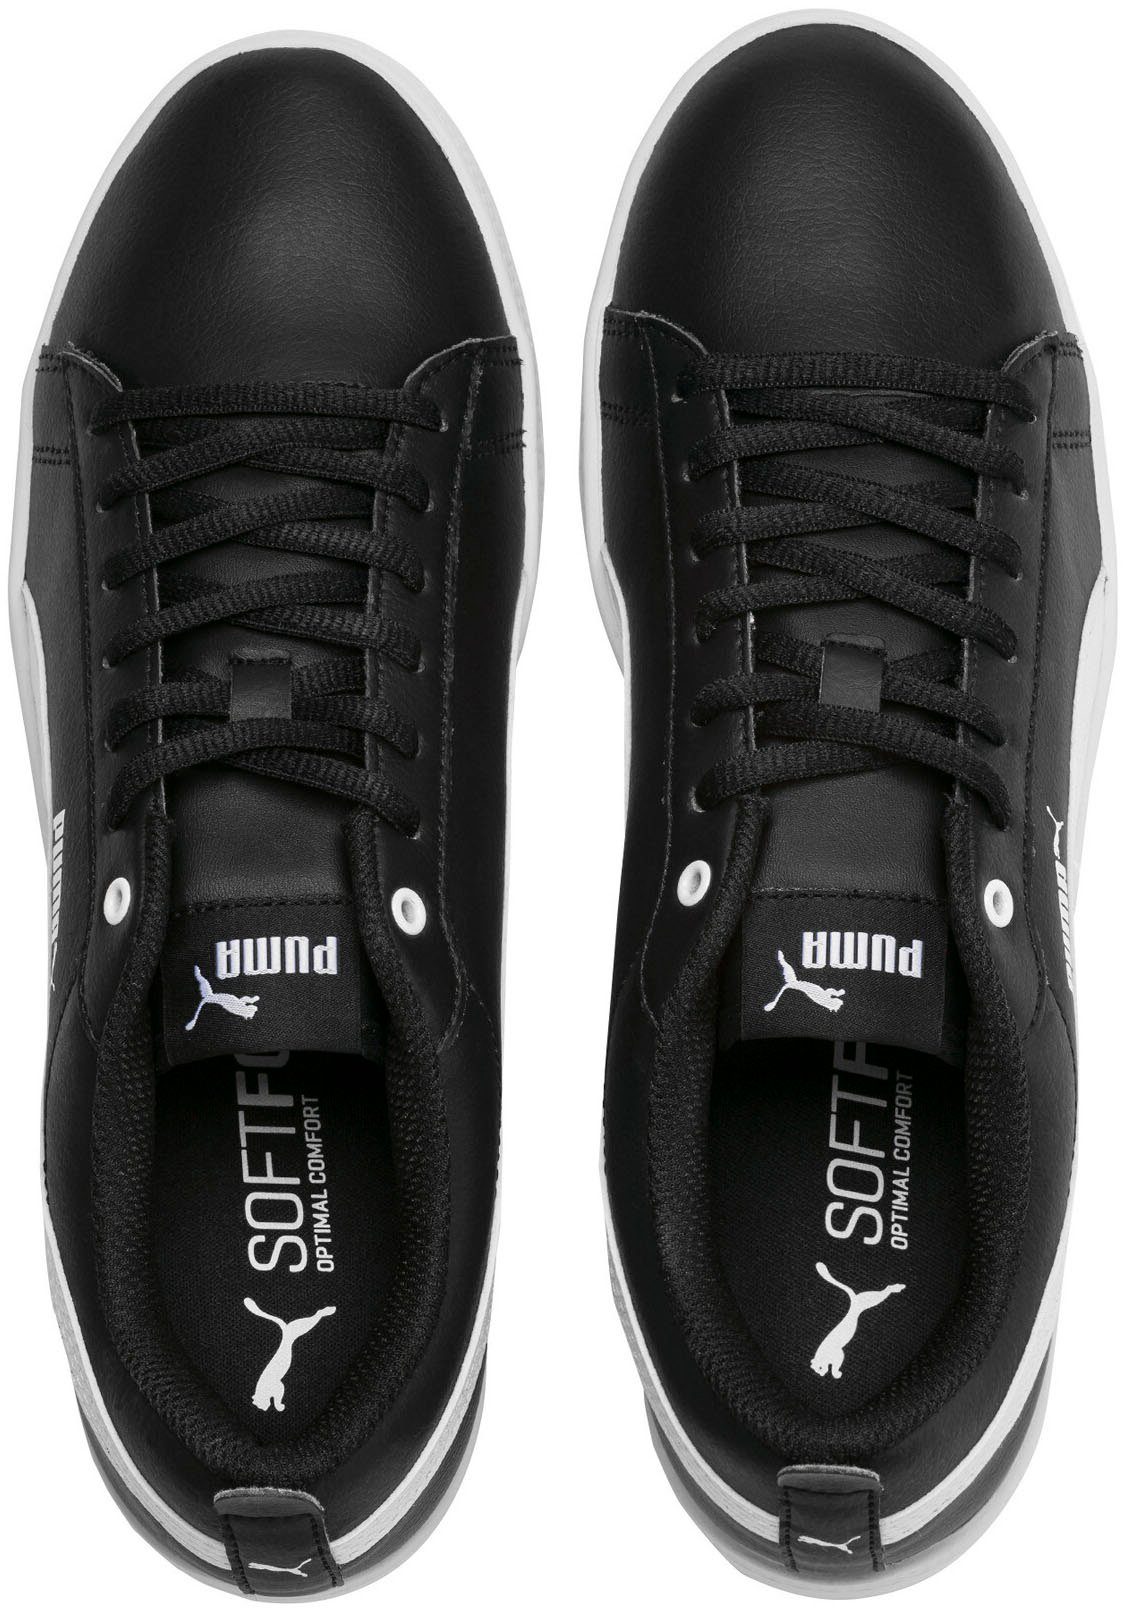 Puma SMASH Black-Puma WNS White Sneaker L V2 PUMA